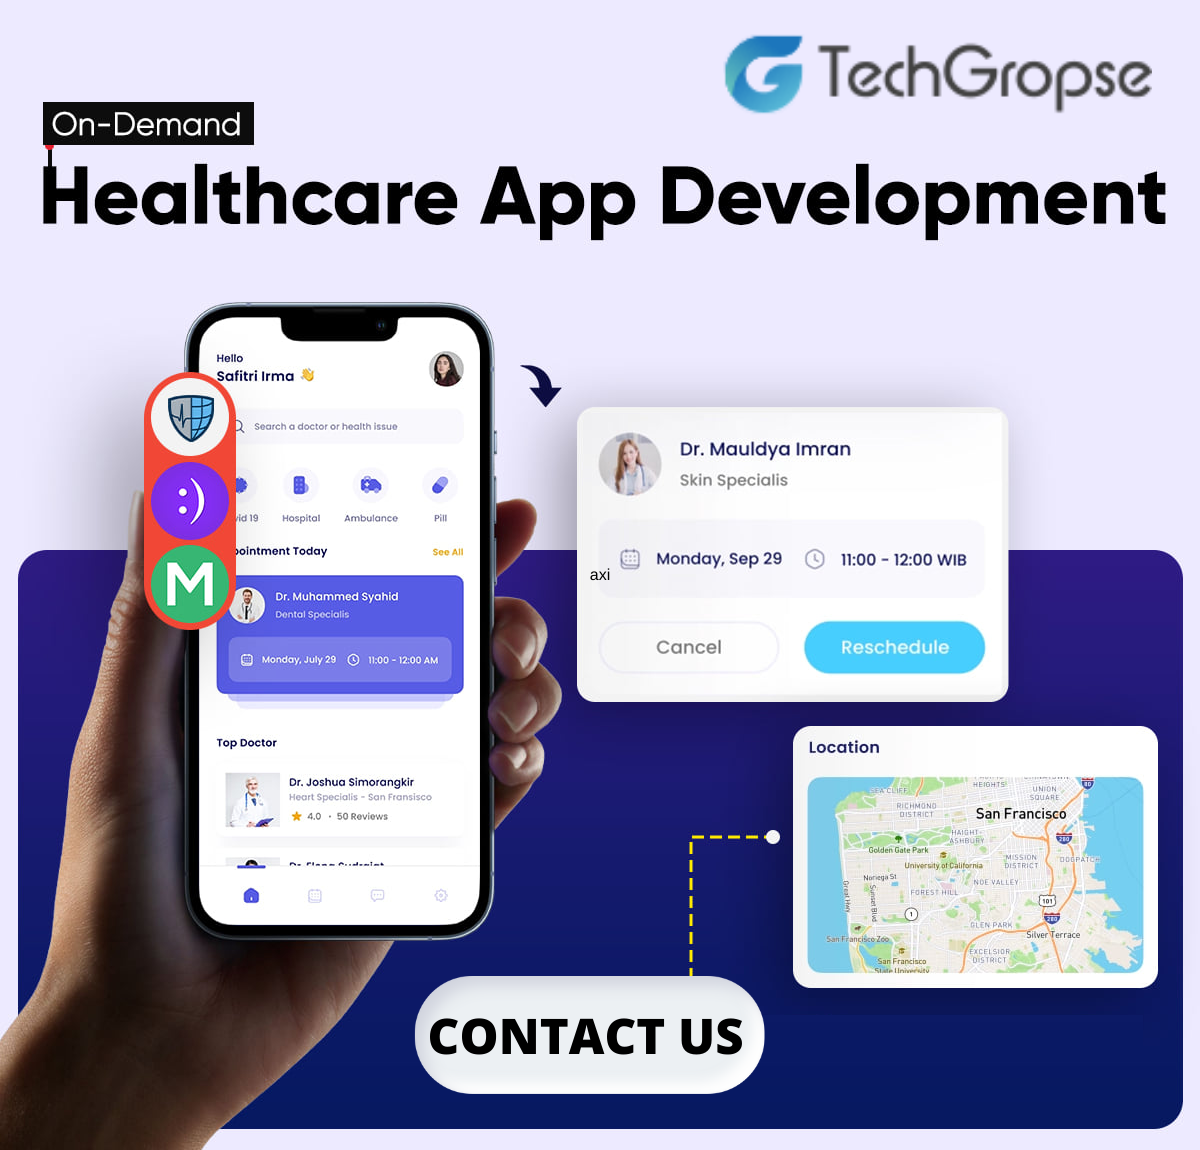 on demand HEALTHCARE app development company techgropse